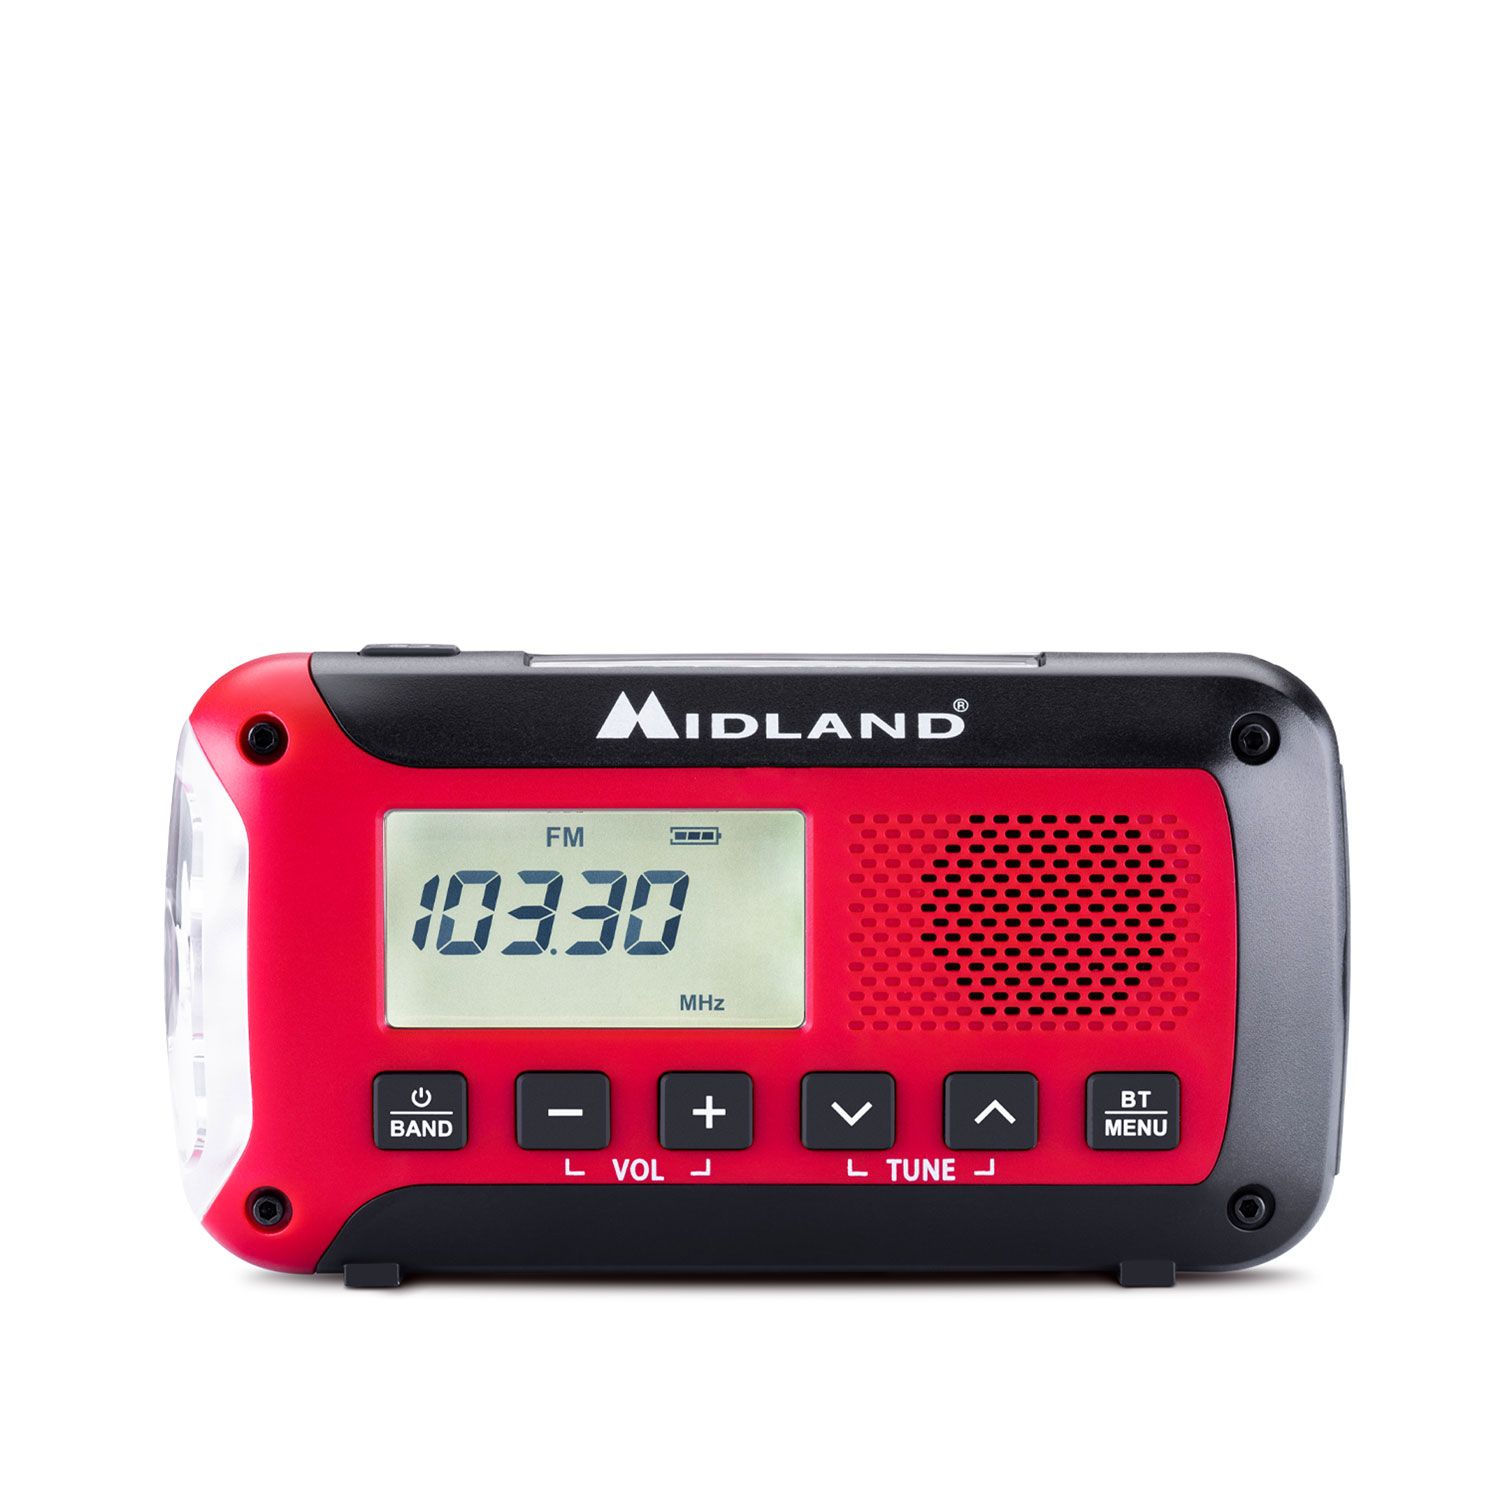 ER250 BT radio de emergencia con Bluetooth